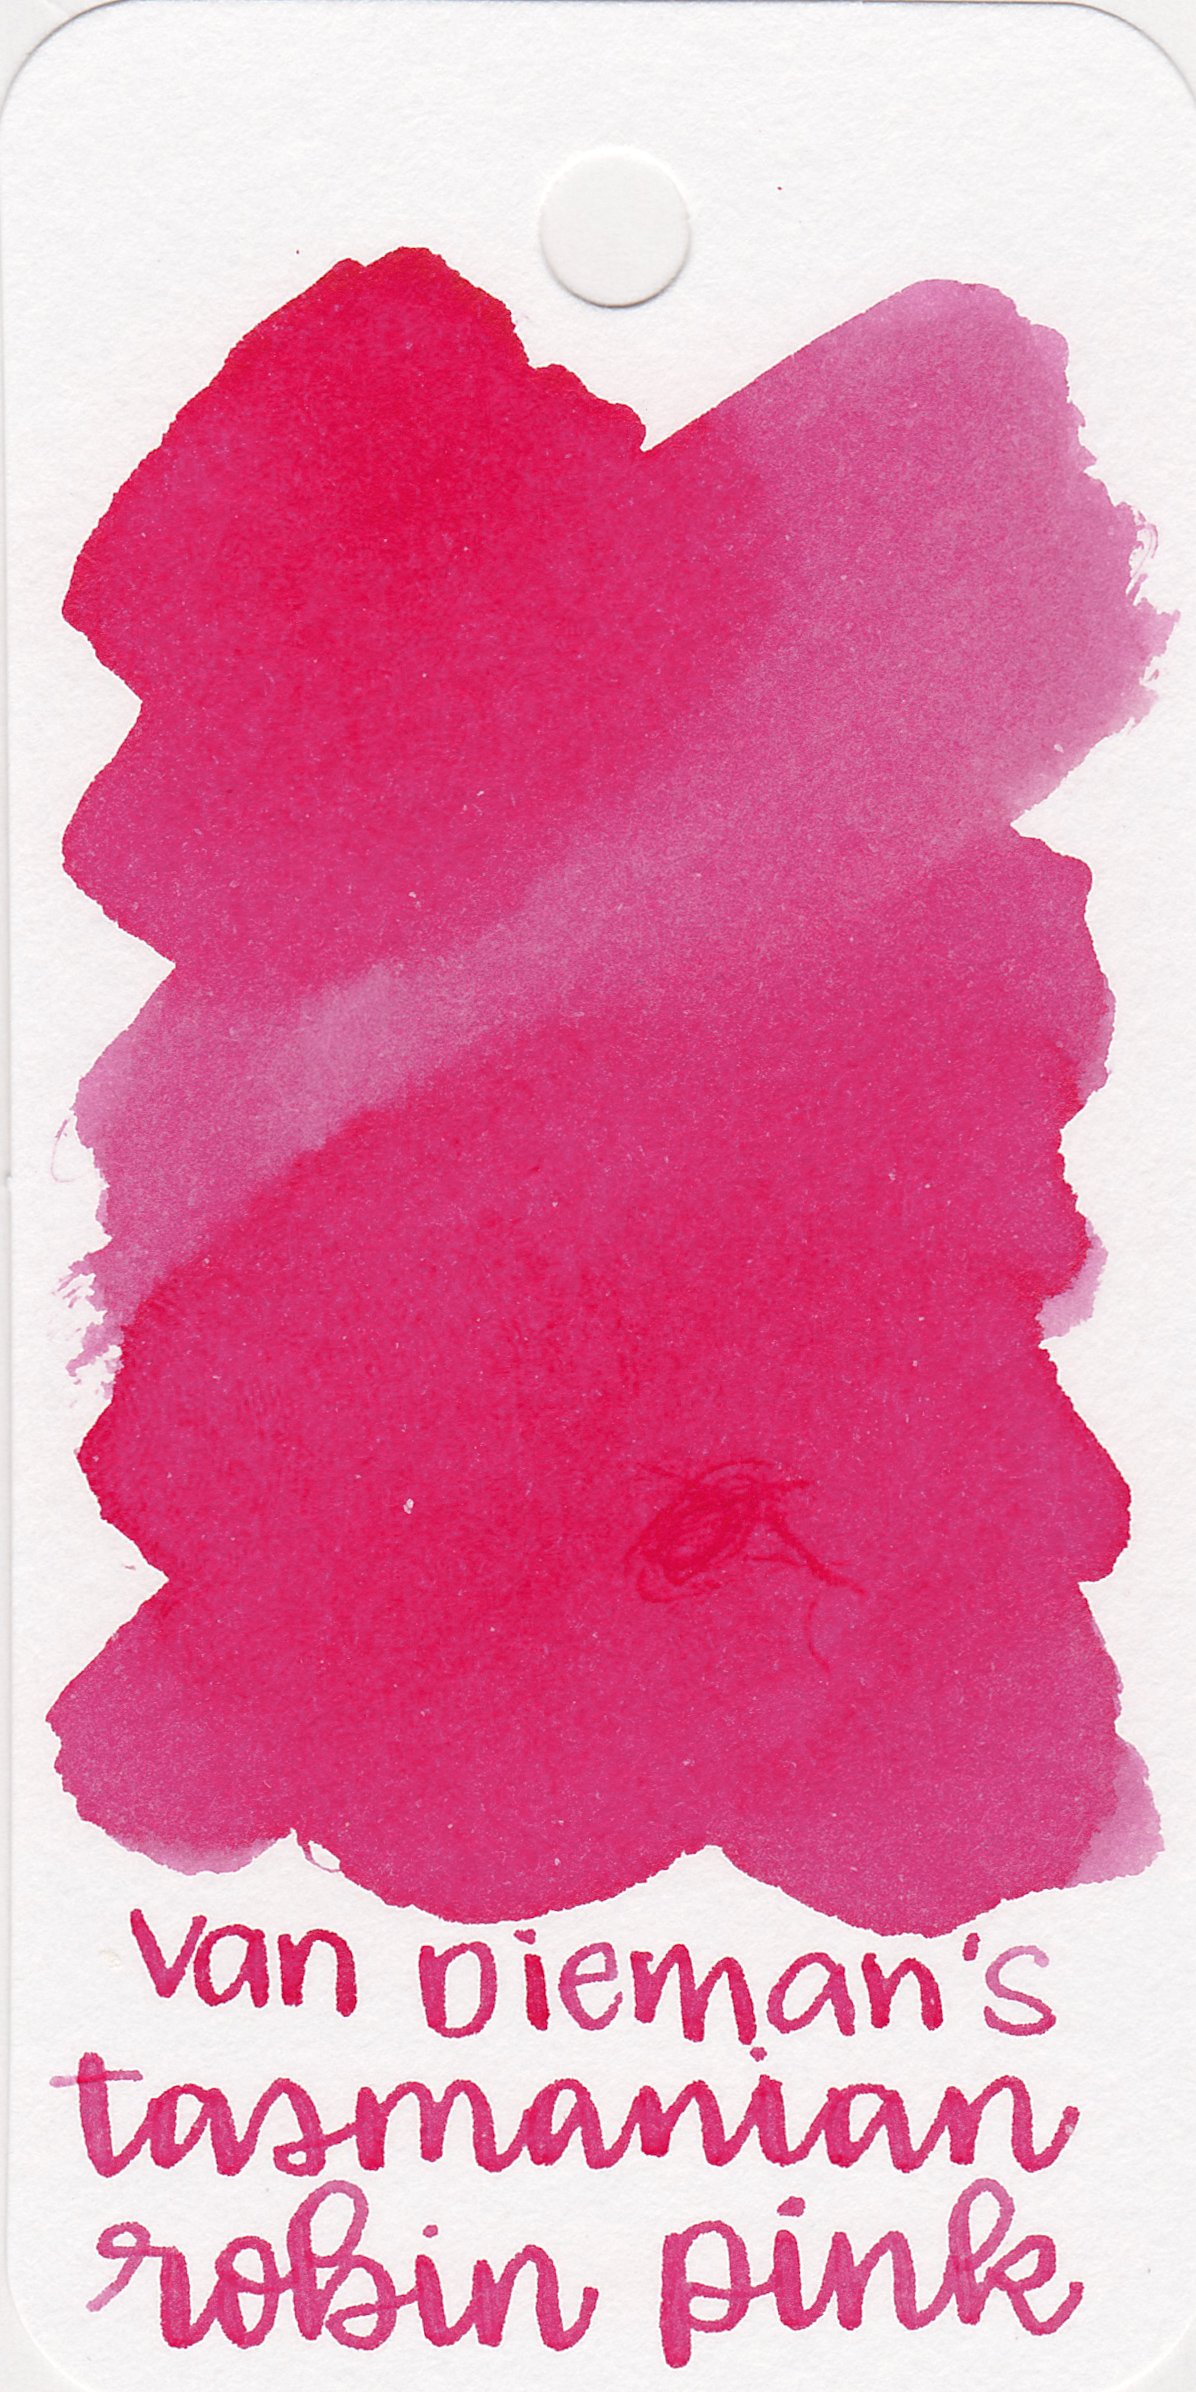 vd-tasmanian-robin-pink-1.jpg